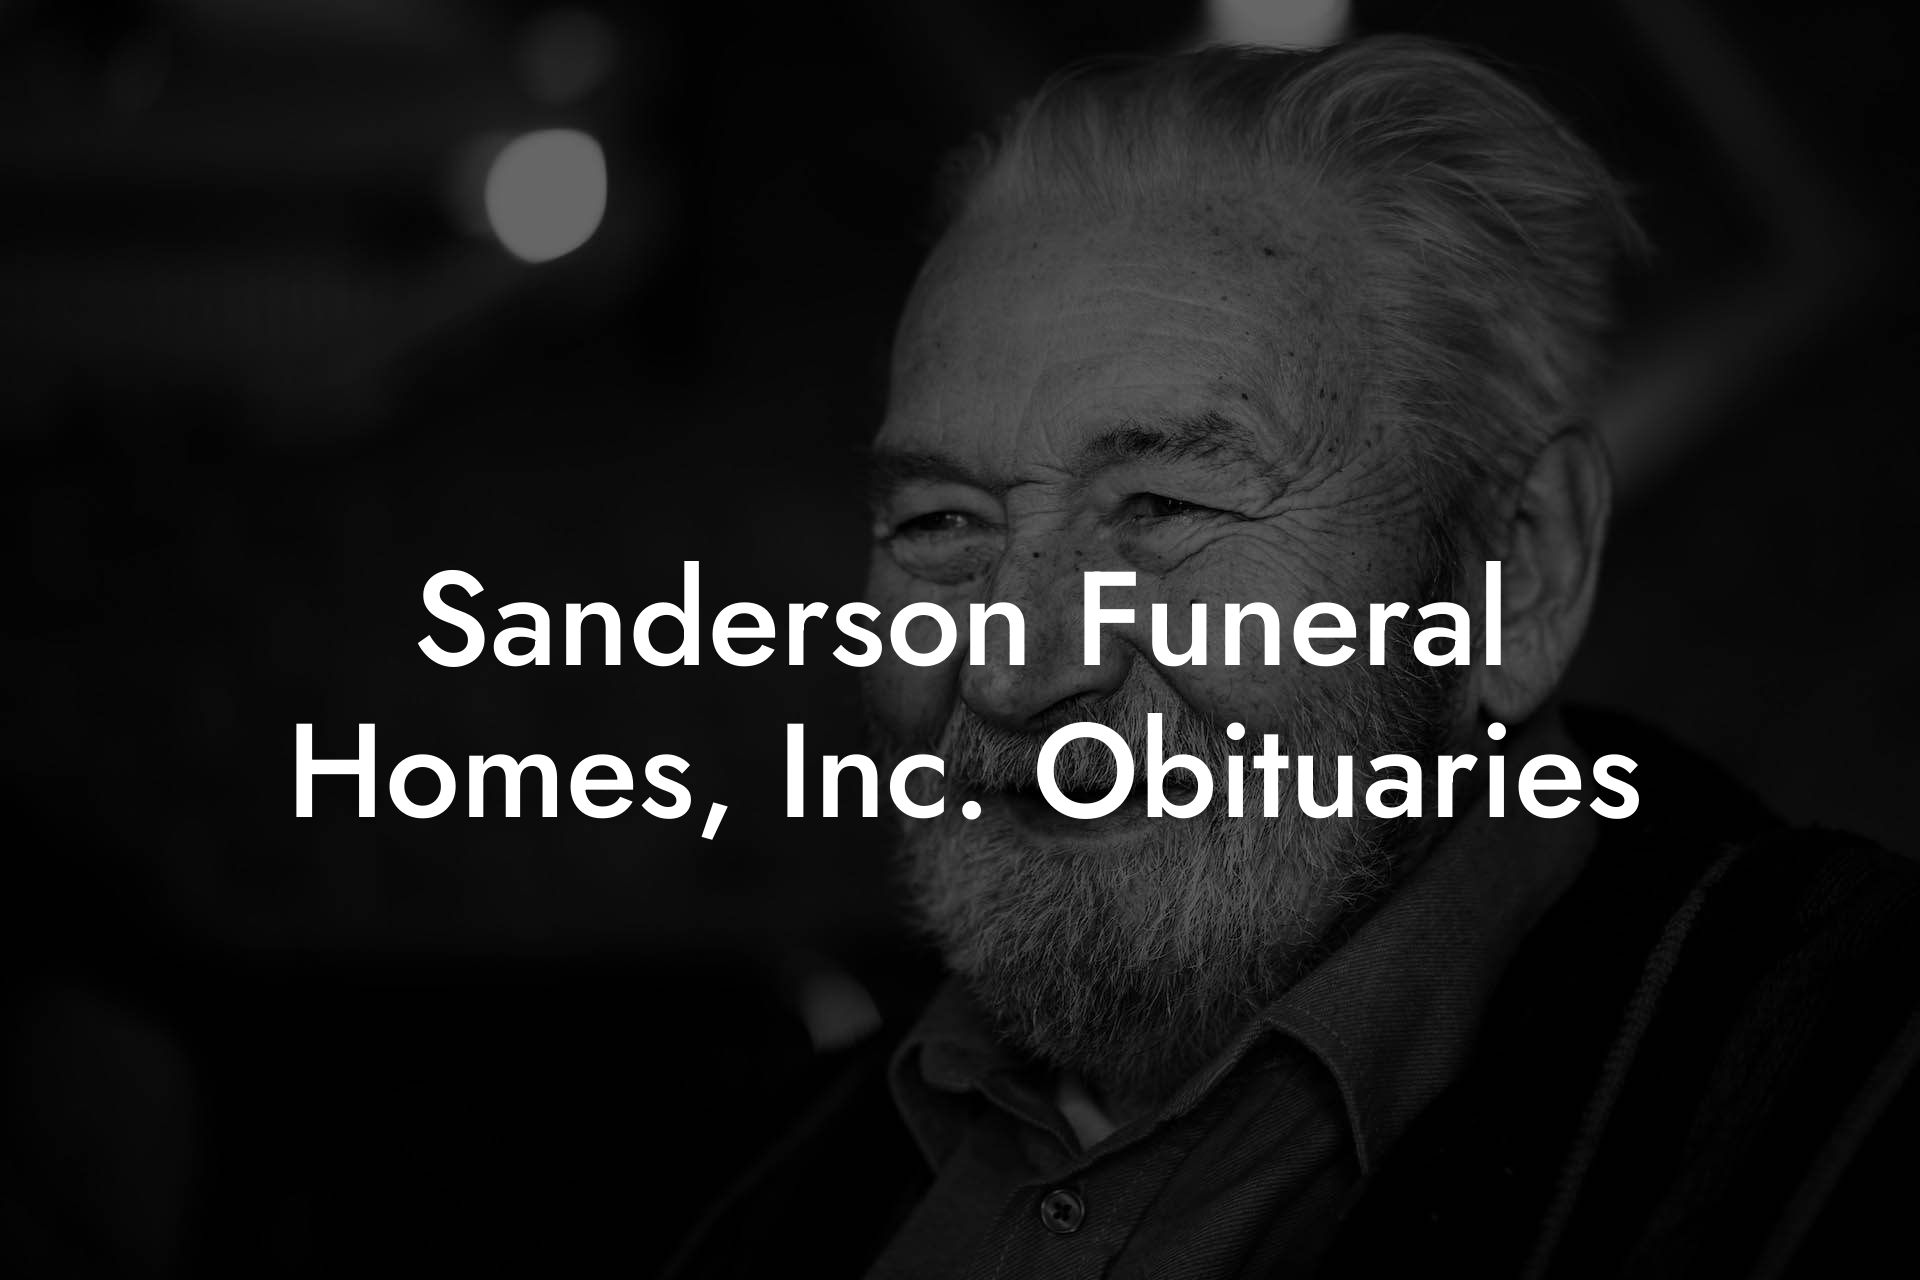 Sanderson Funeral Homes, Inc. Obituaries